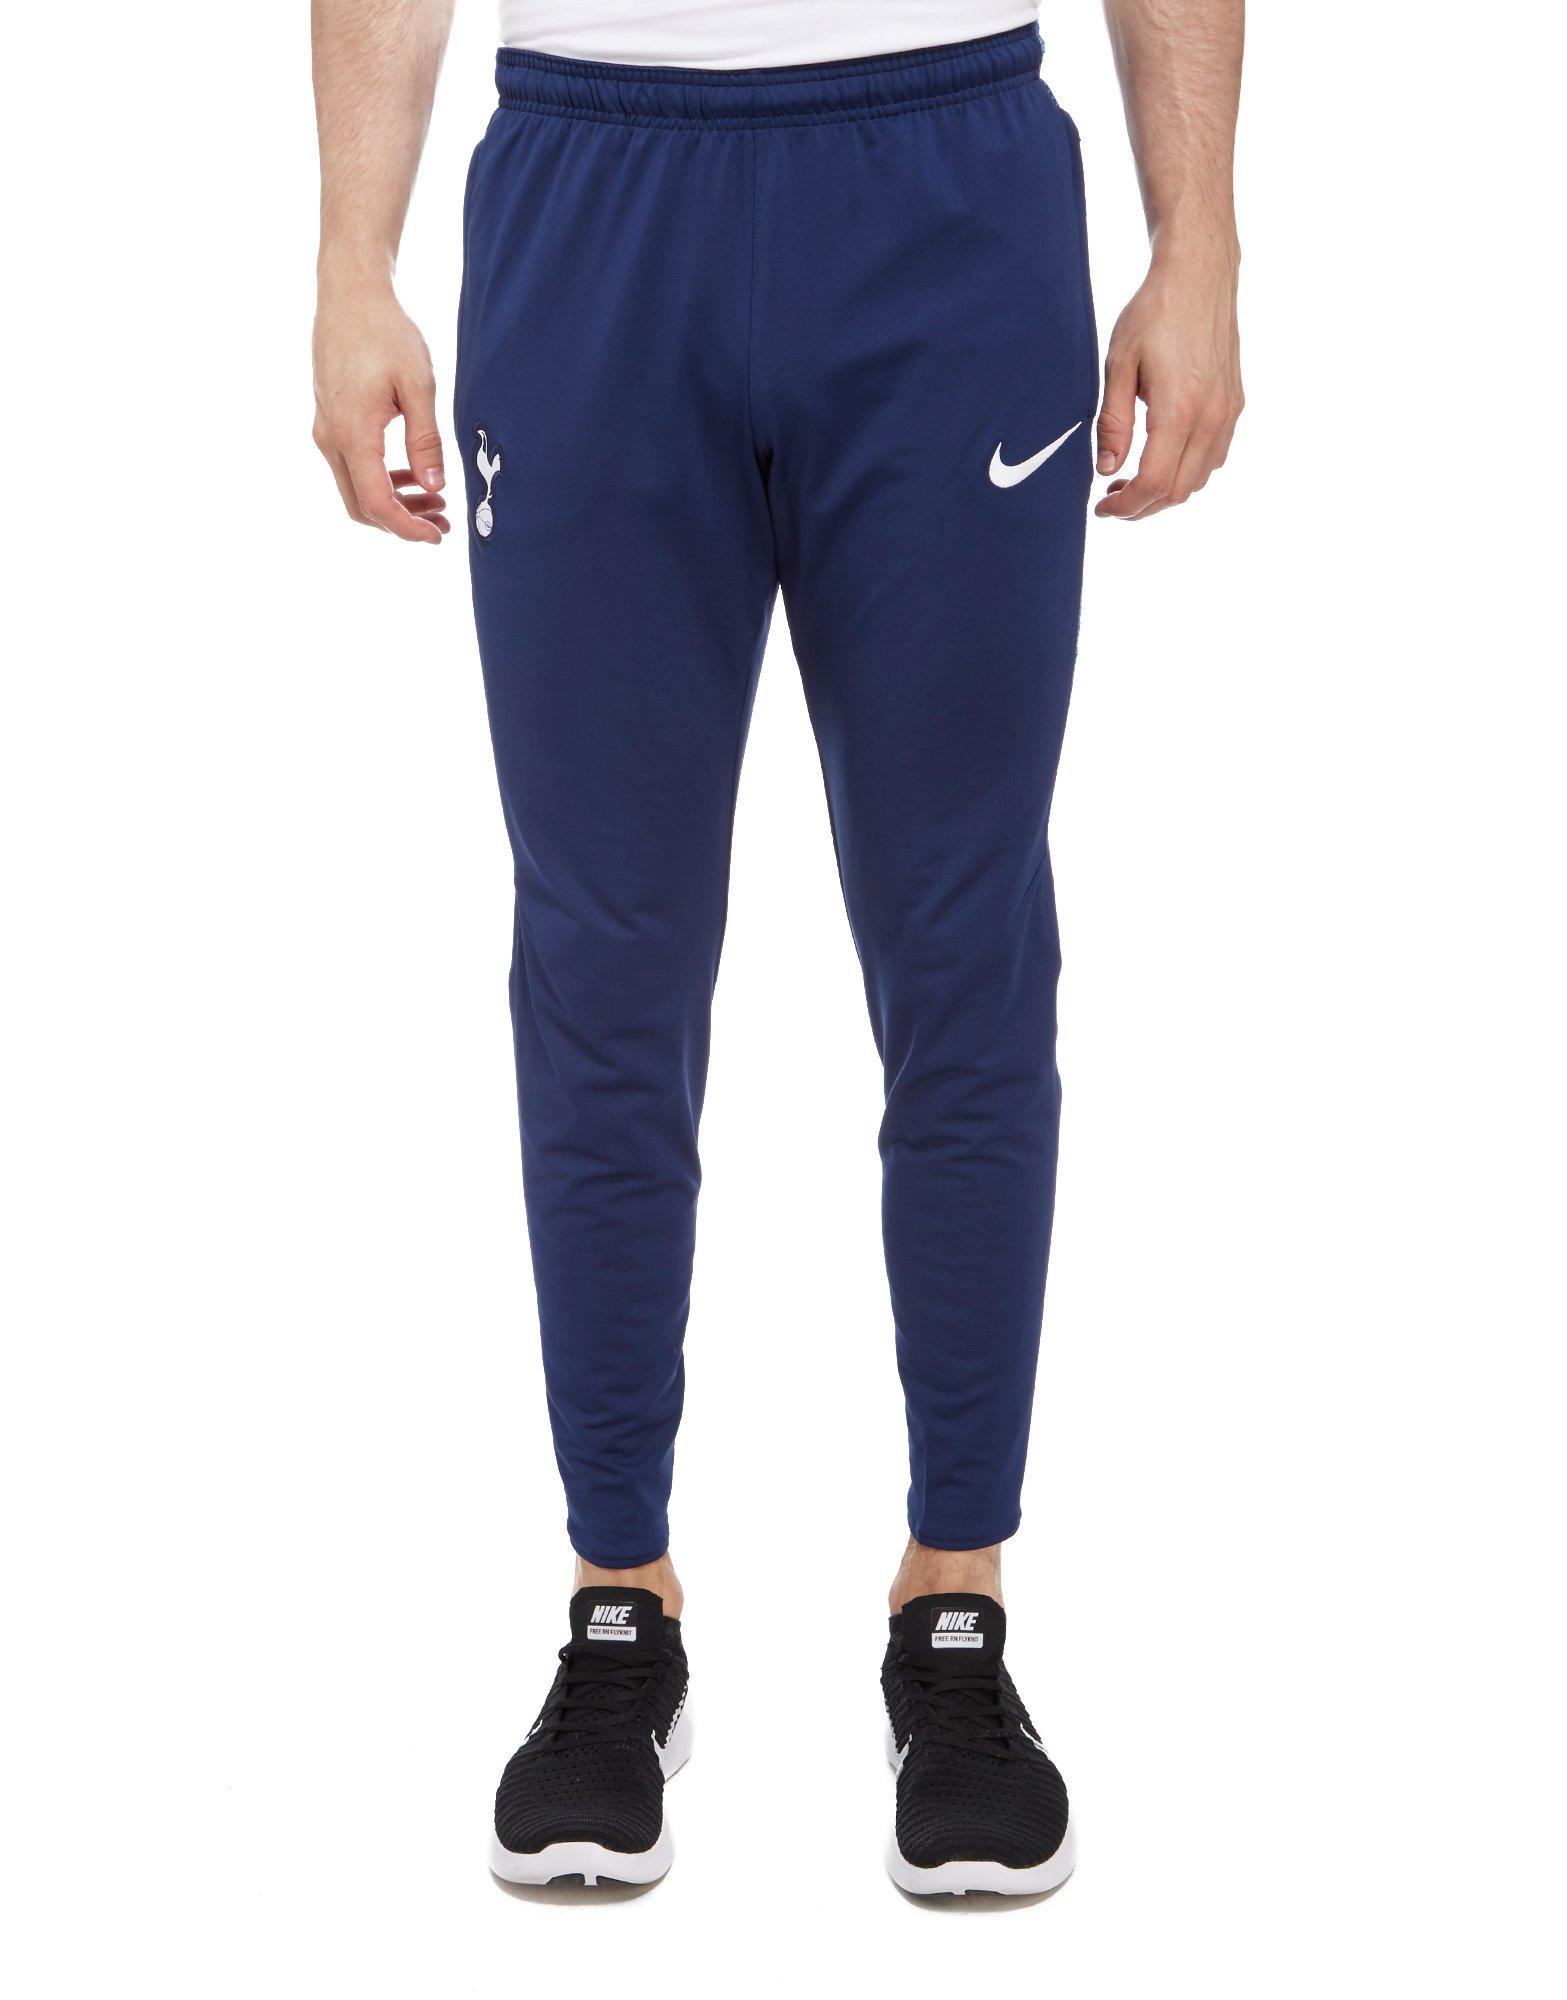 Lyst - Nike Tottenham Hotspur 2017 Squad Track Pants in Blue for Men